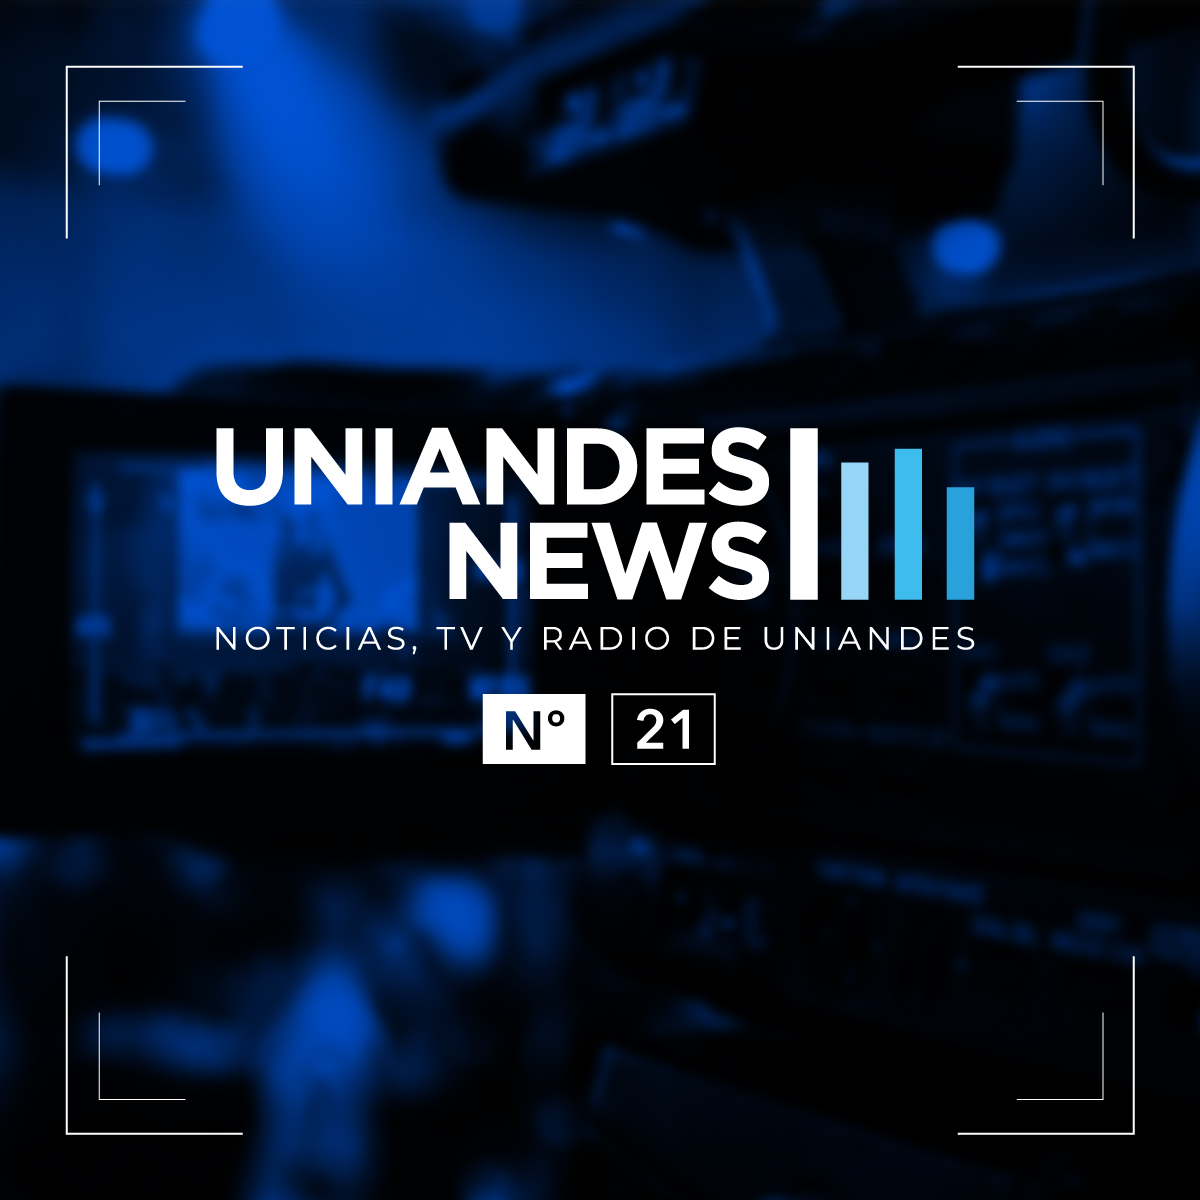 Uniandes News 21